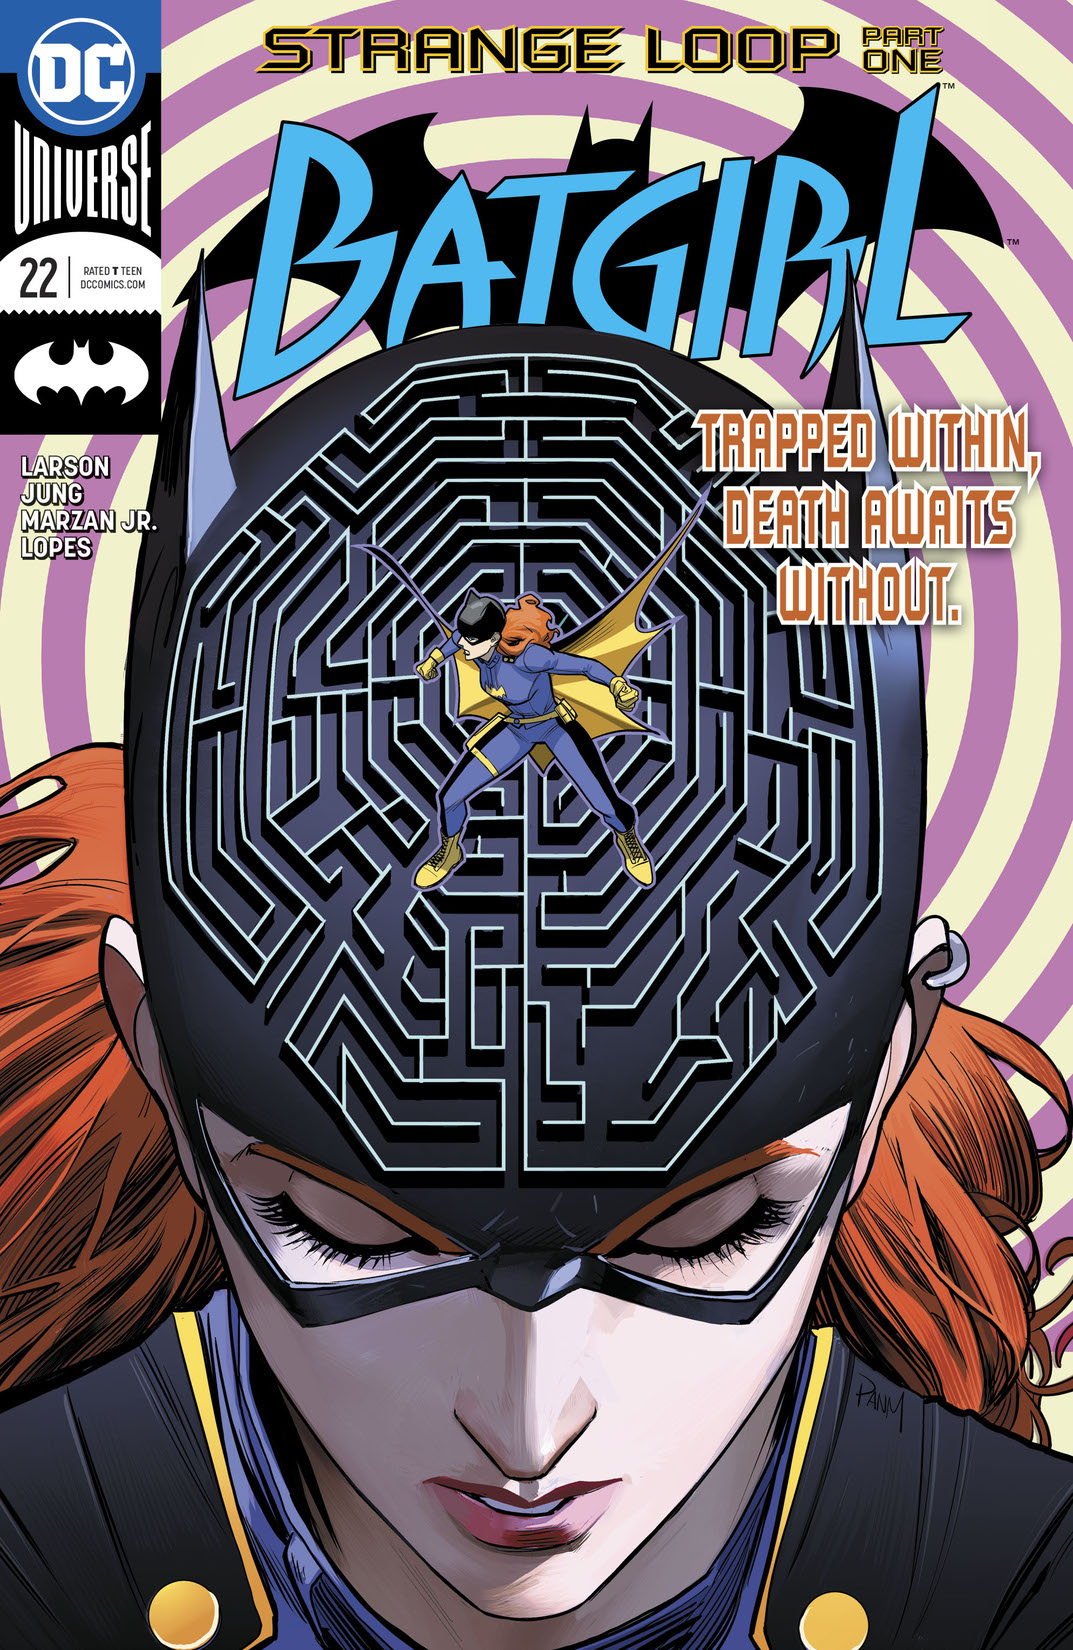 Batgirl (2016-) #22 preview images